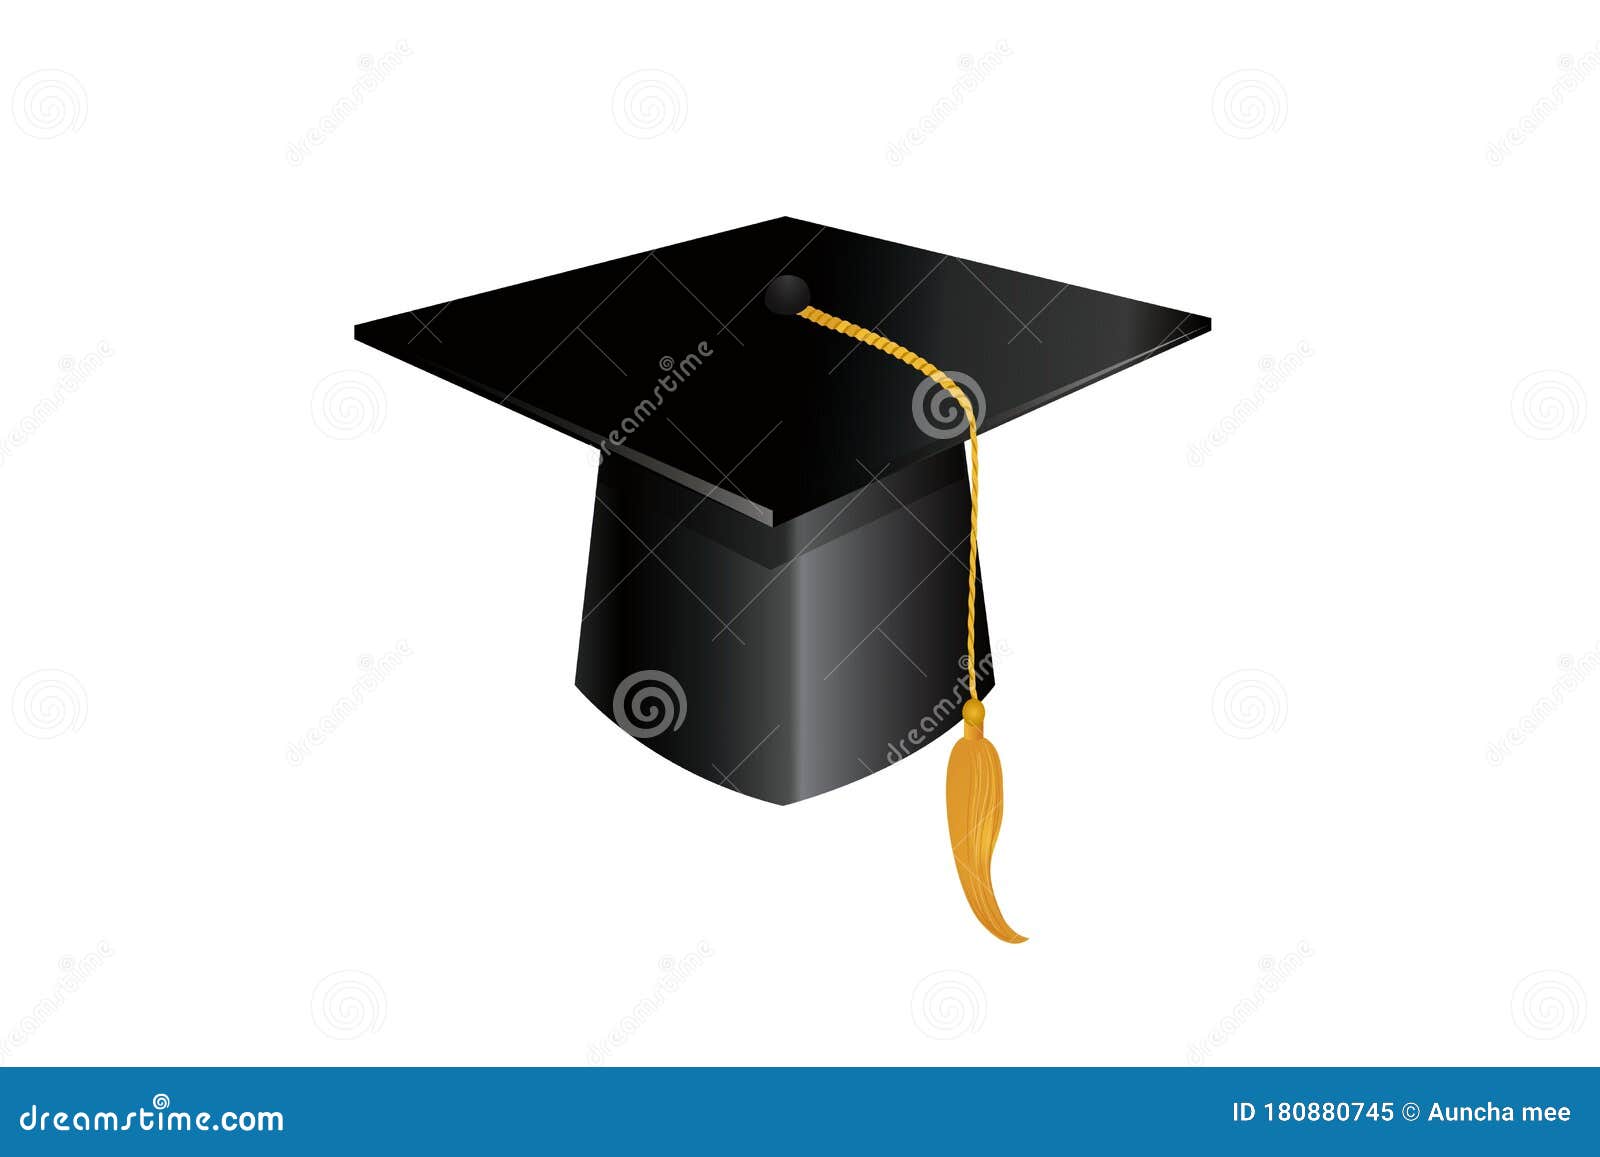 Gradution Cap Isolated on White. Stock Image - Image of design, school ...